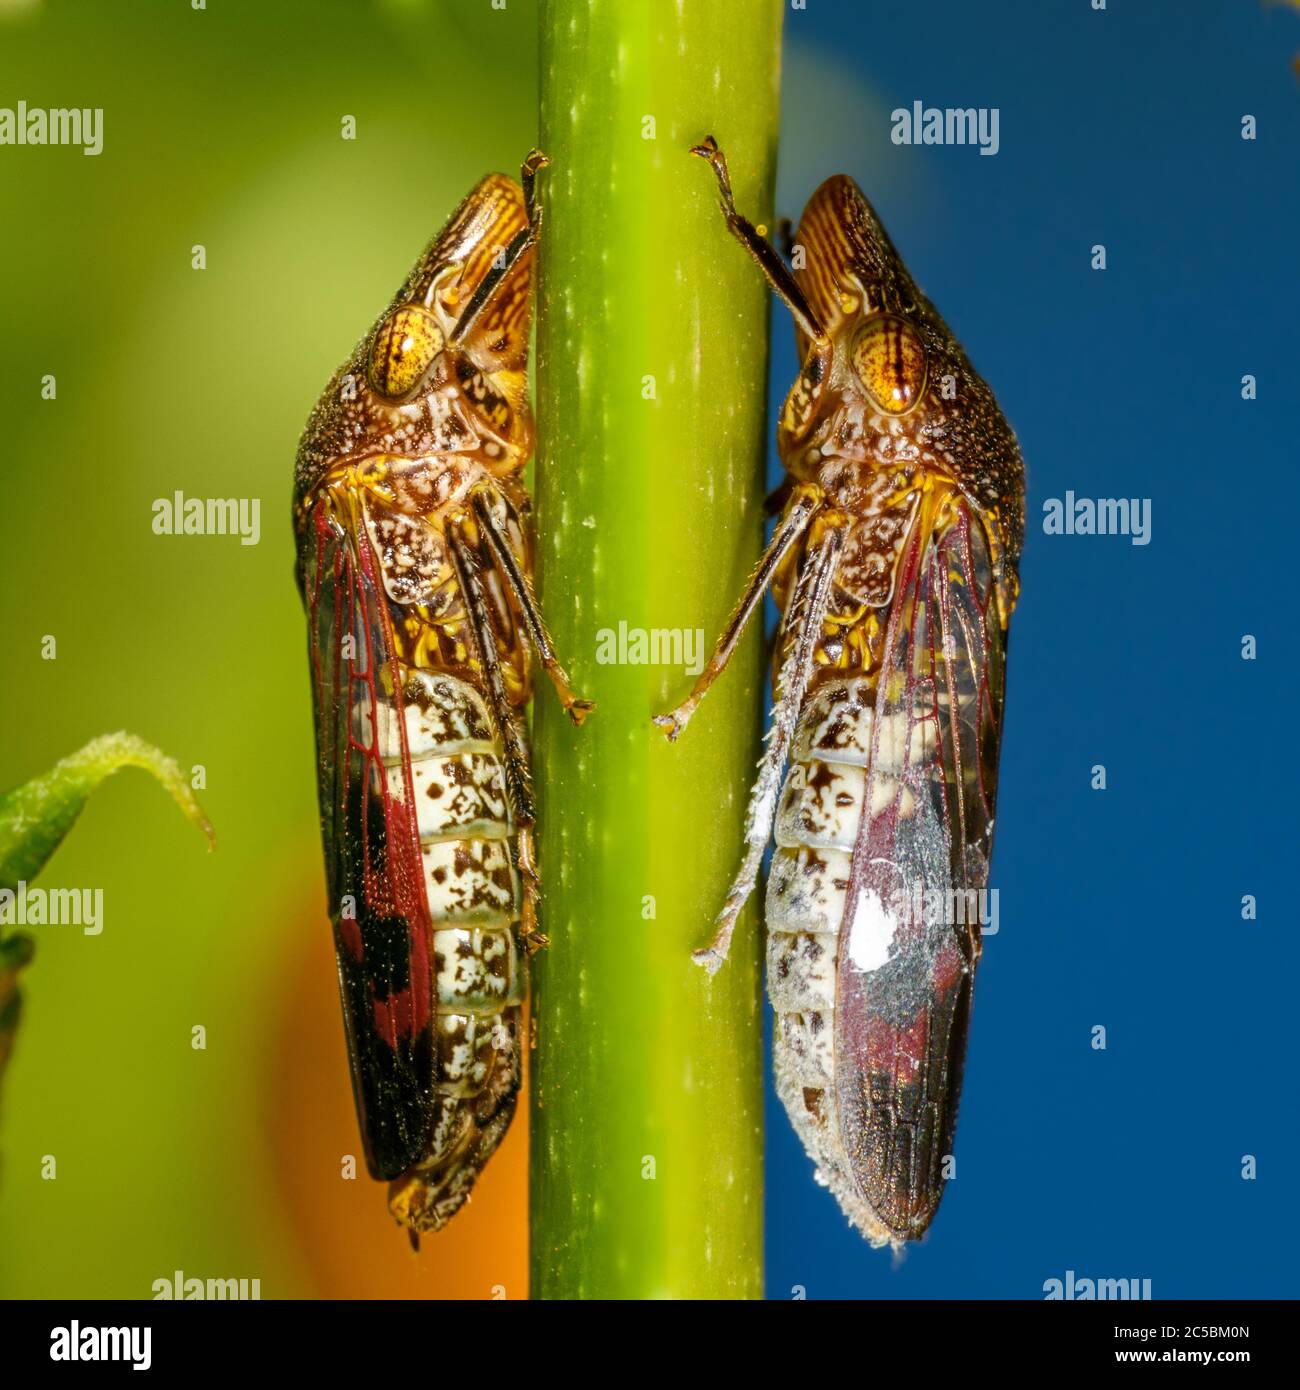 Glassy-winged sharpshooter - Homalodisca vitripennis – (formerly H. coagulata) male and female photo composition Stock Photo